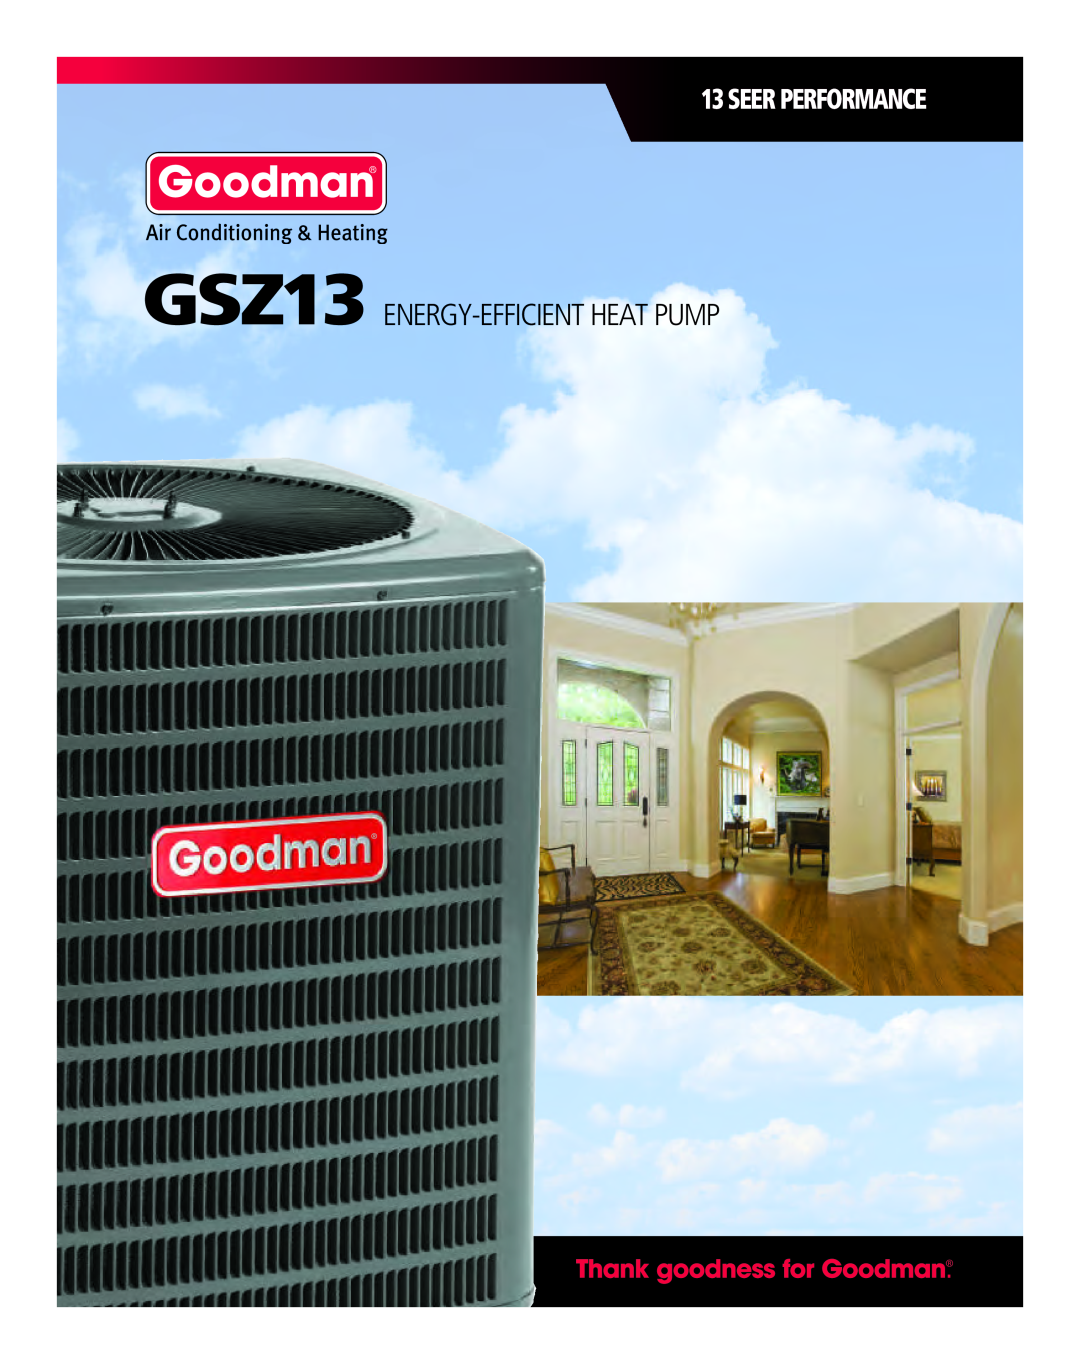 Goodman Mfg ENERGY-EFFICIENT HEAT PUMP manual GSZ13 ENERGY-EFFICIENTHEAT PUMP, Seer Performance 